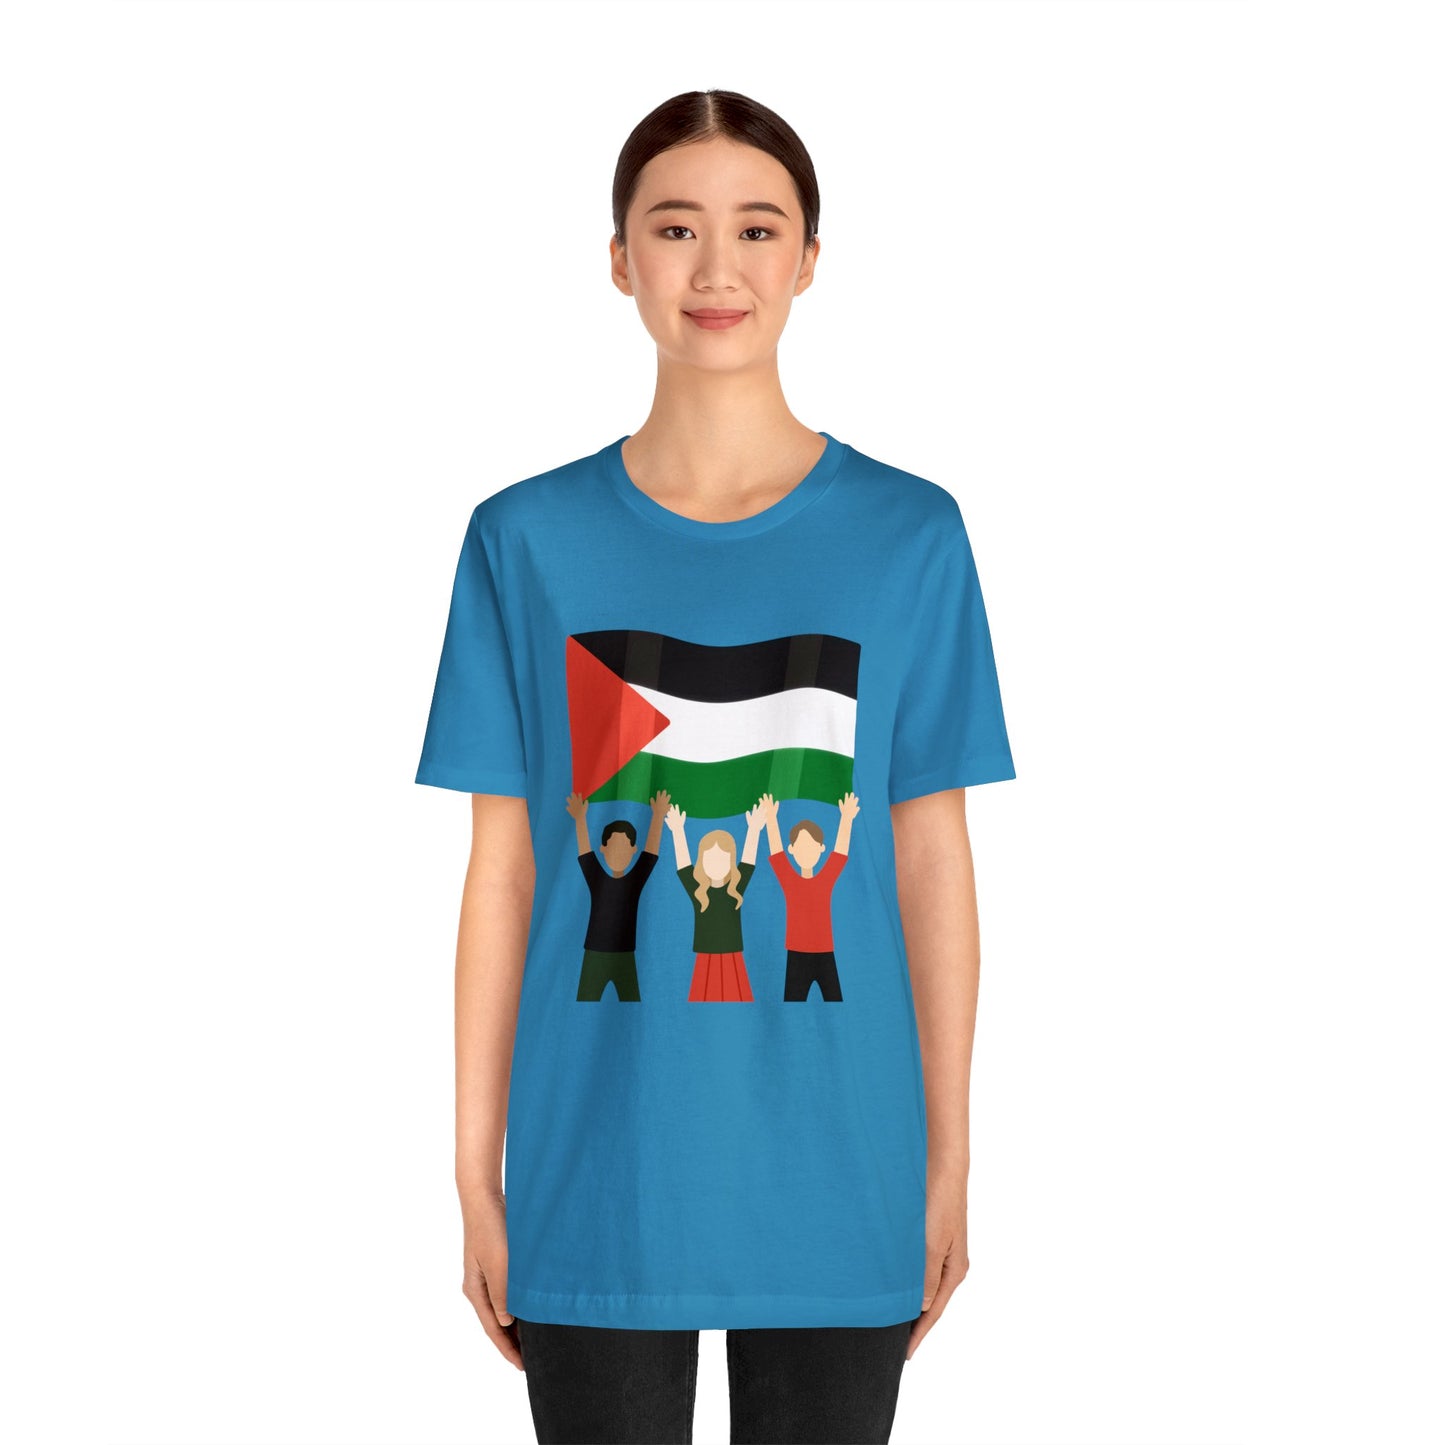 Palestine flag with kids Unisex Jersey Short Sleeve Tee